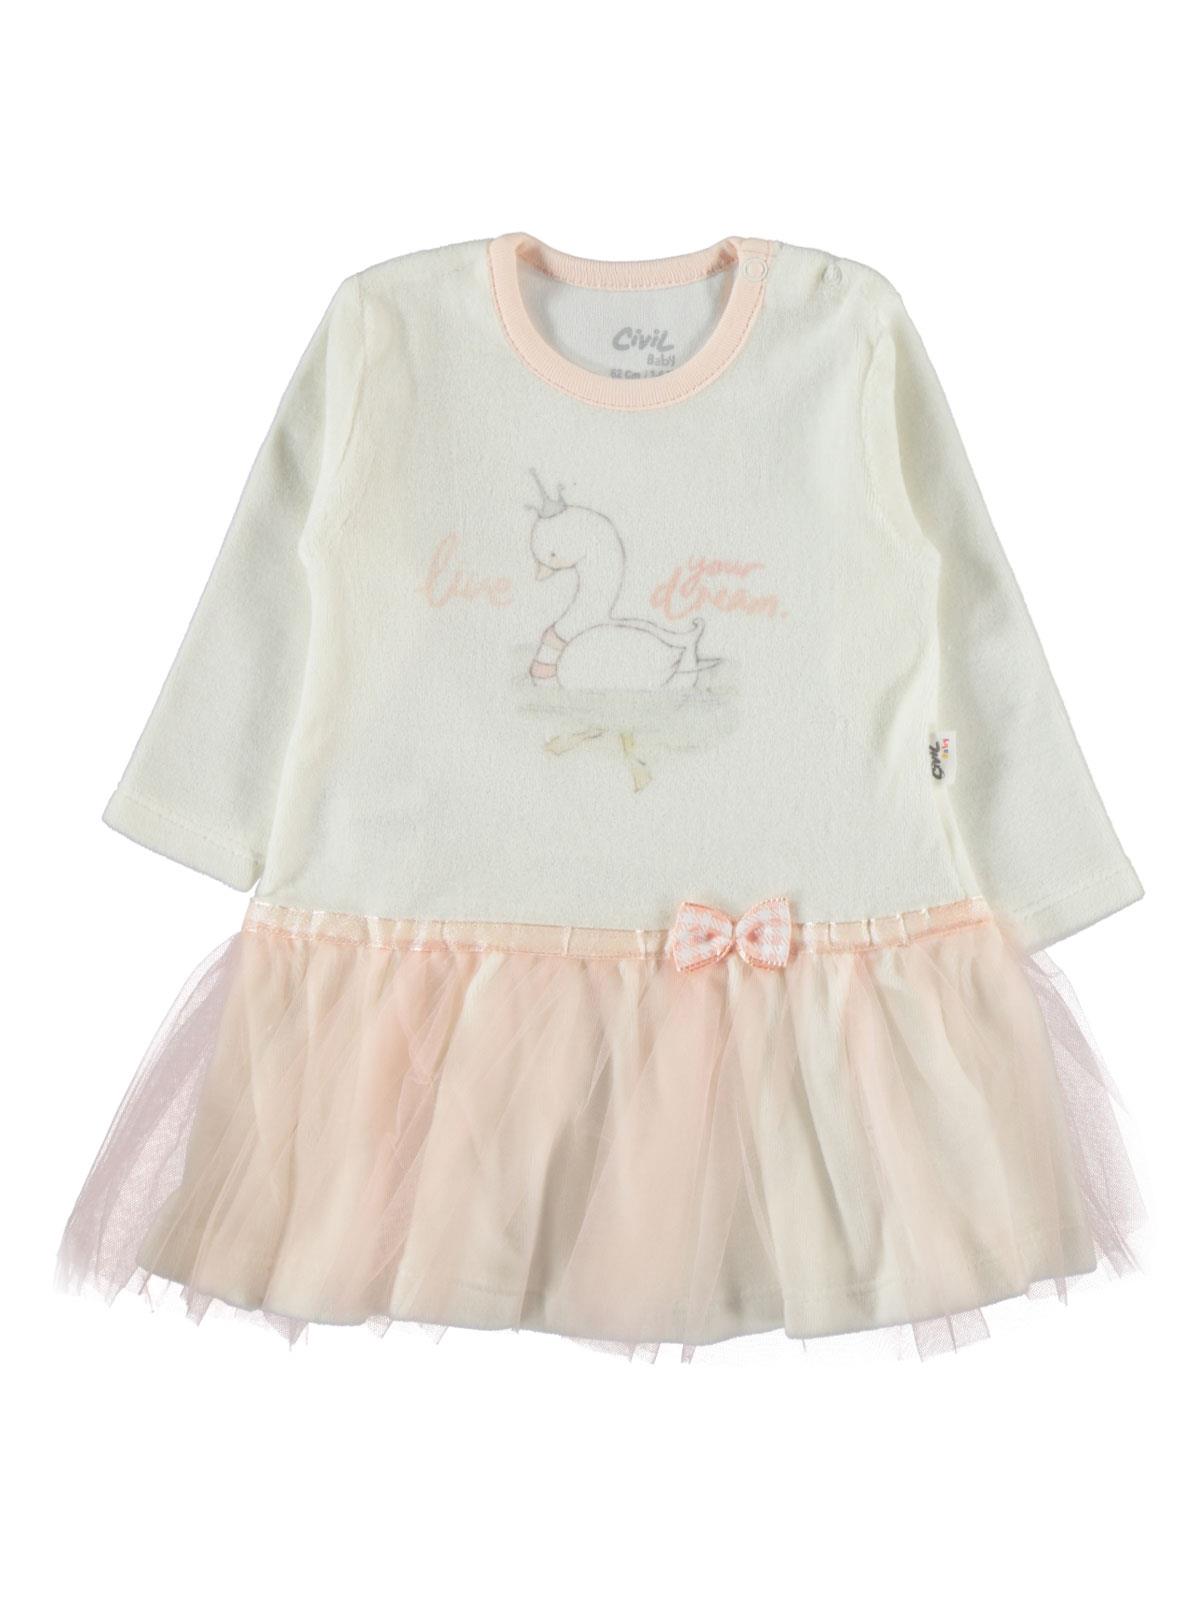 Civil Baby Kız Bebek Elbise 3-12 Ay Somon